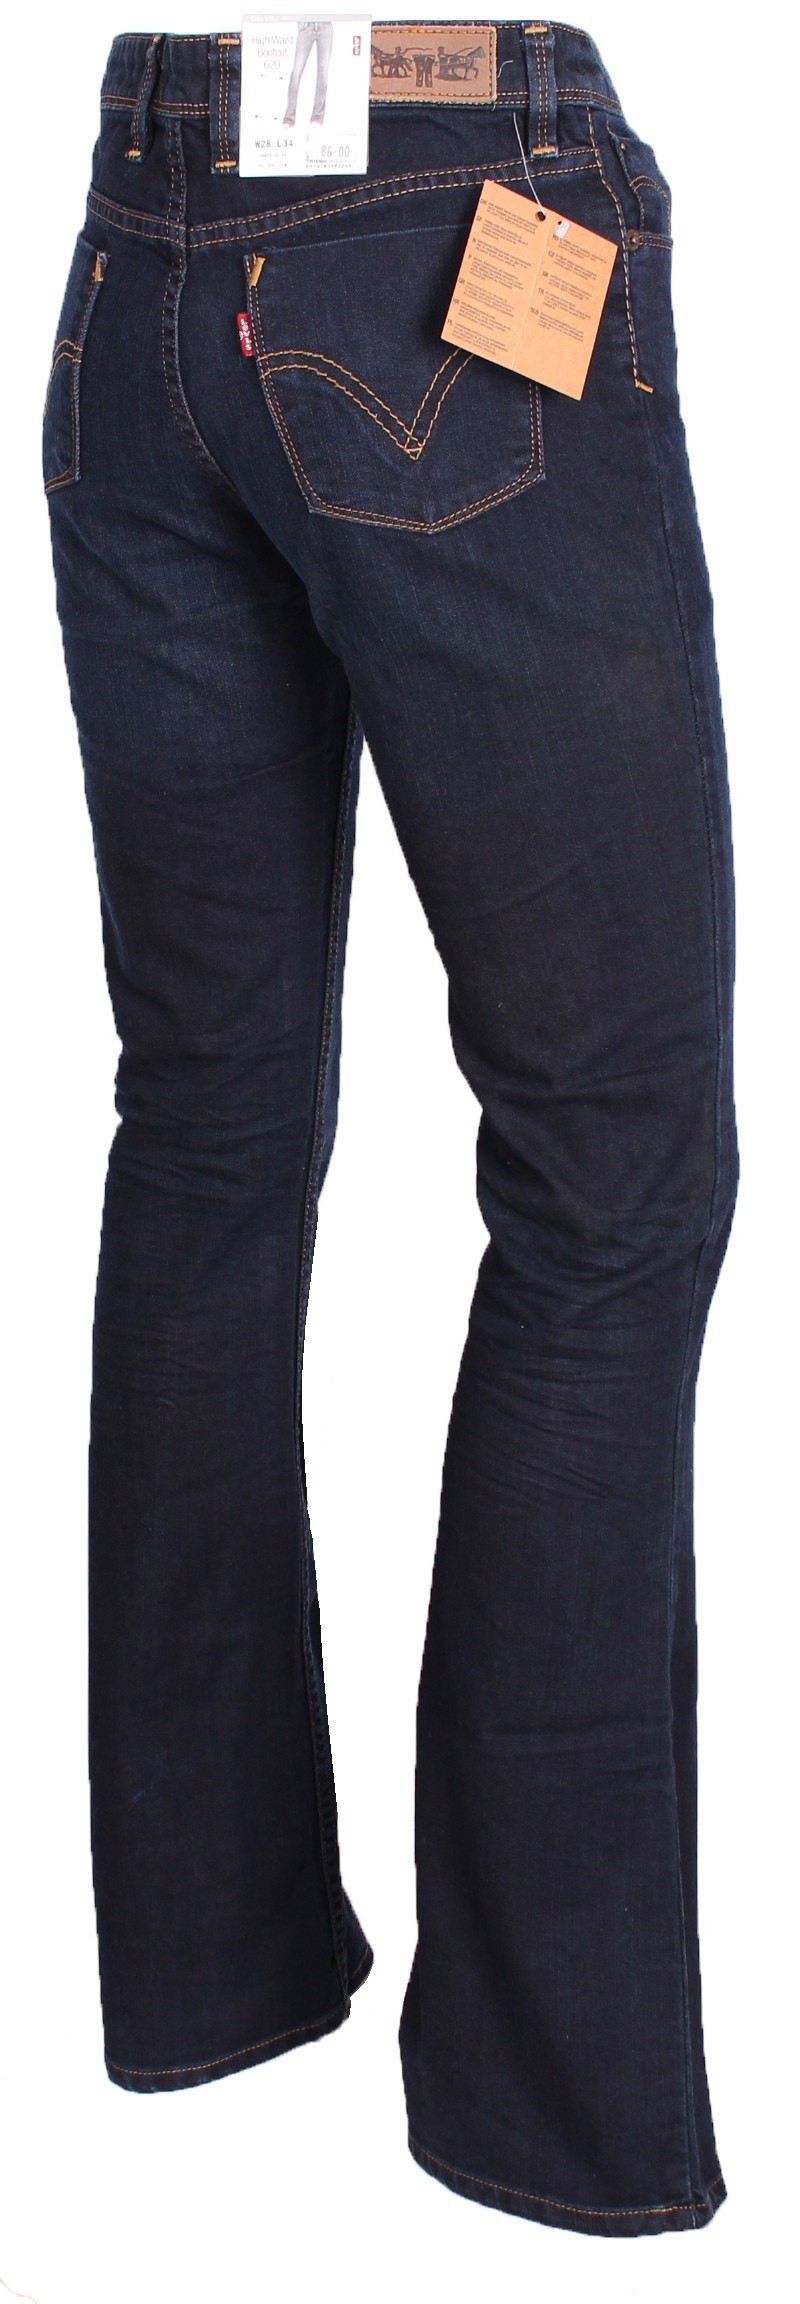 levi's 629 bootcut jeans